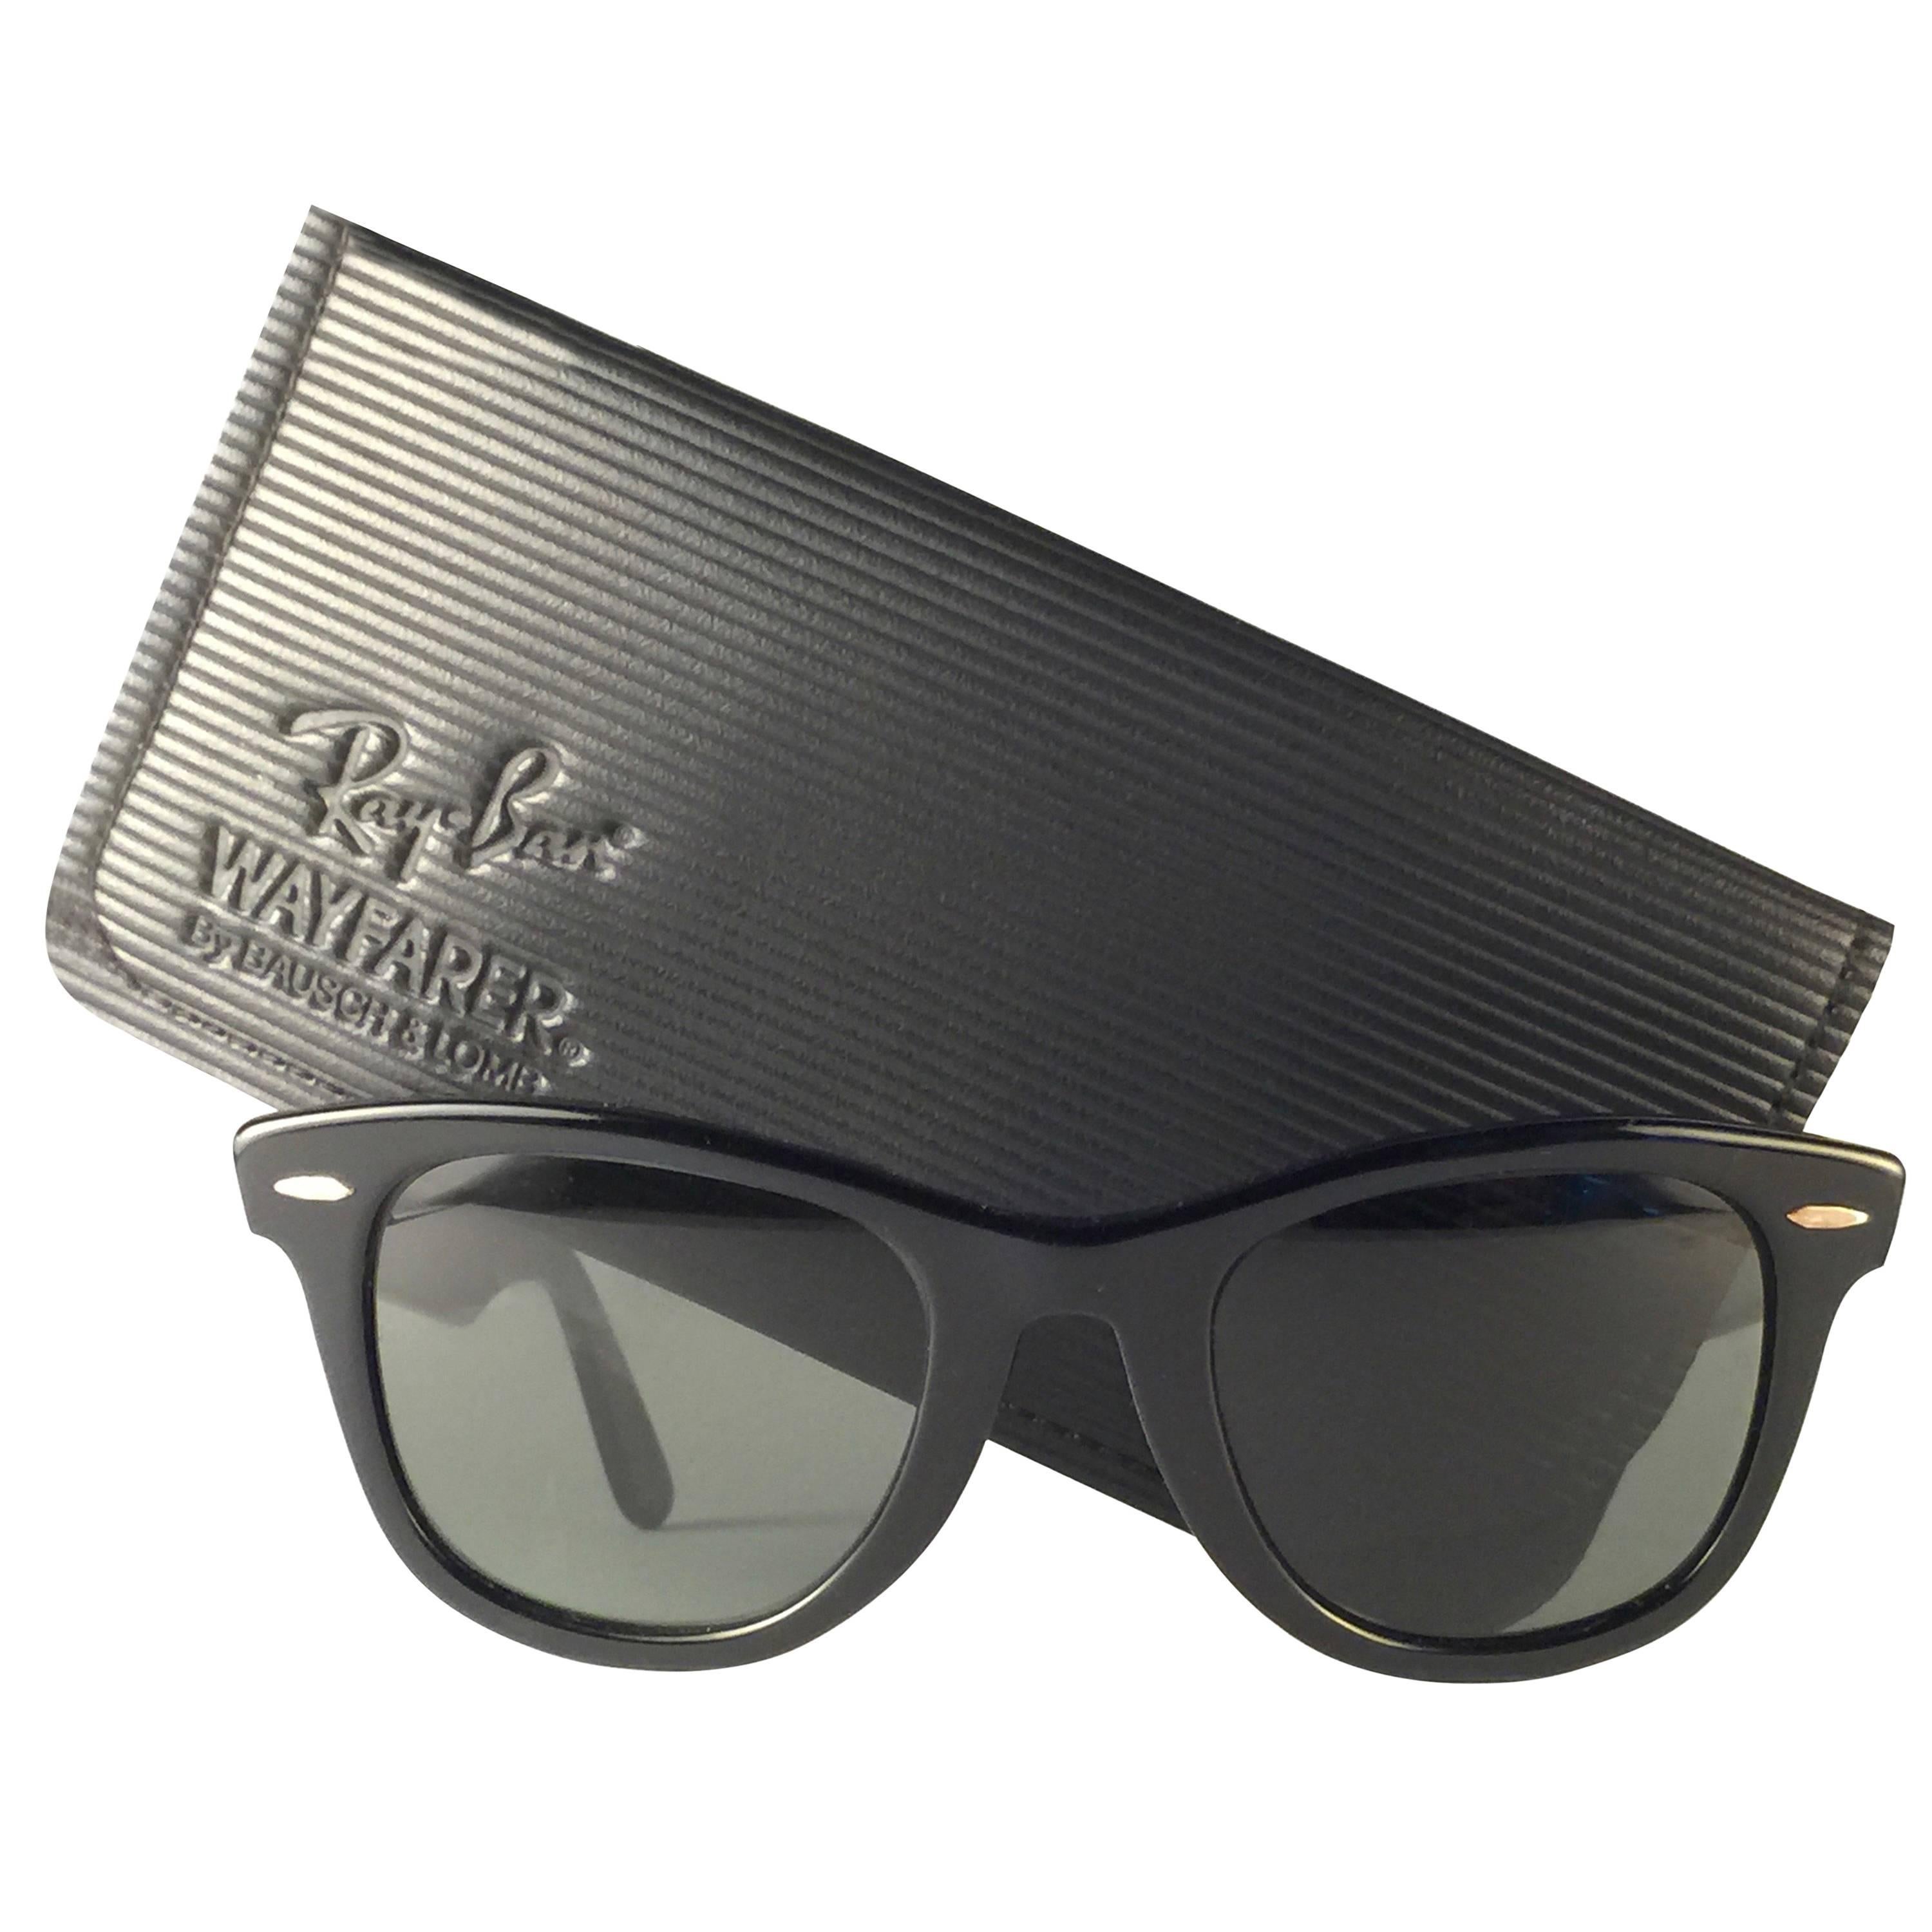 New Ray Ban The Wayfarer Black G15 Grey Lenses USA 80's Sunglasses